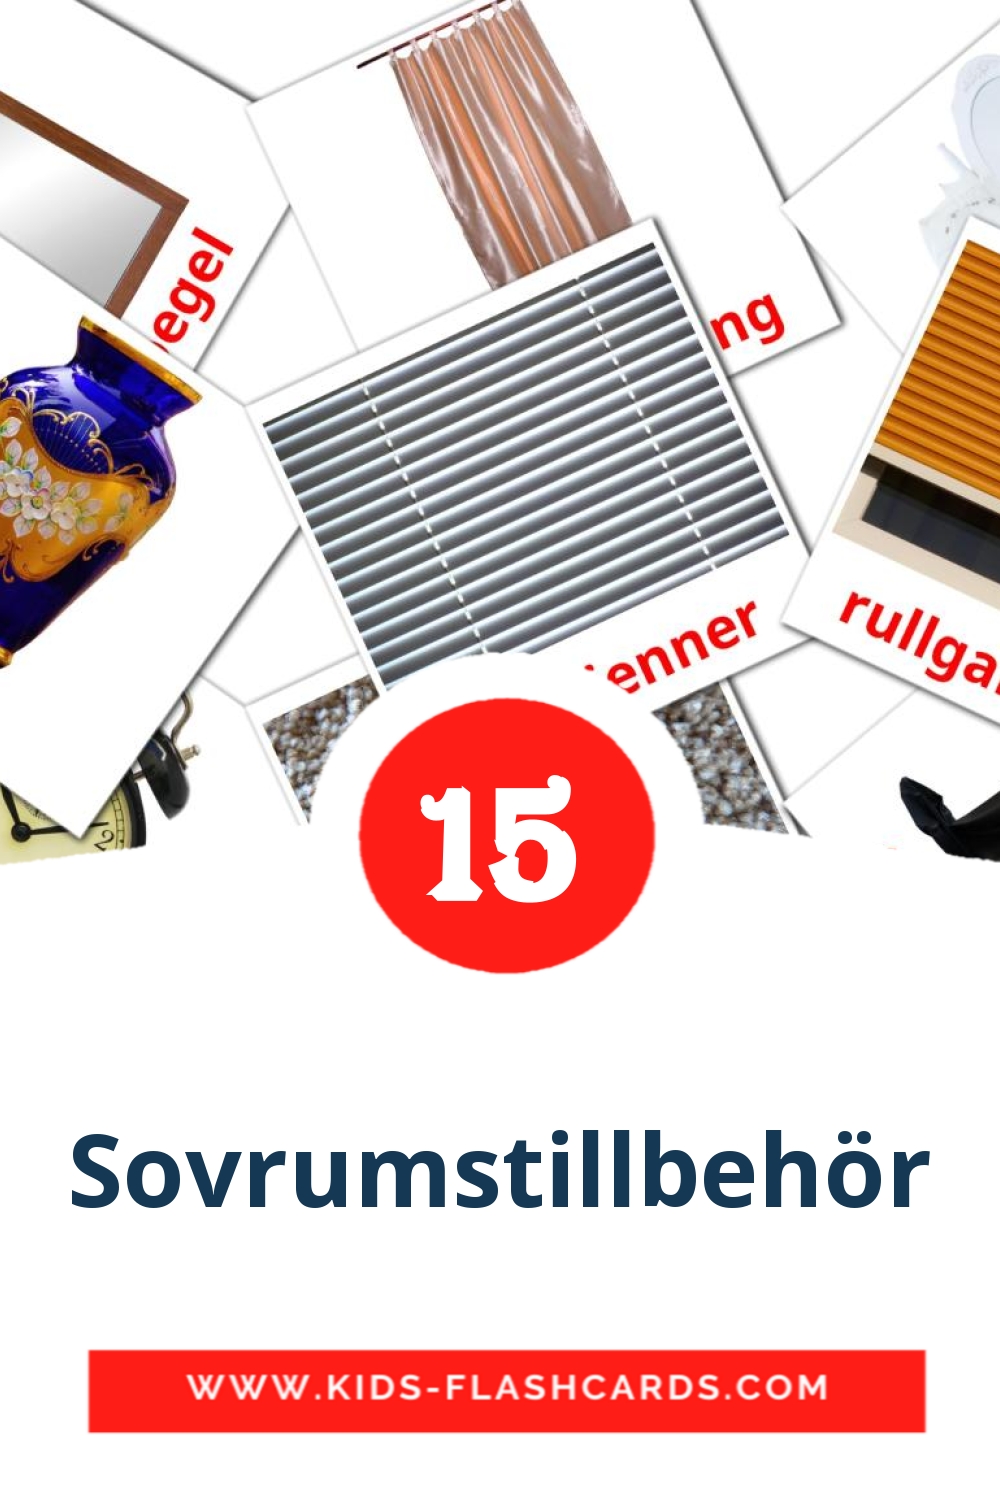 sovrumstillbehör на шведском для Детского Сада (18 карточек)